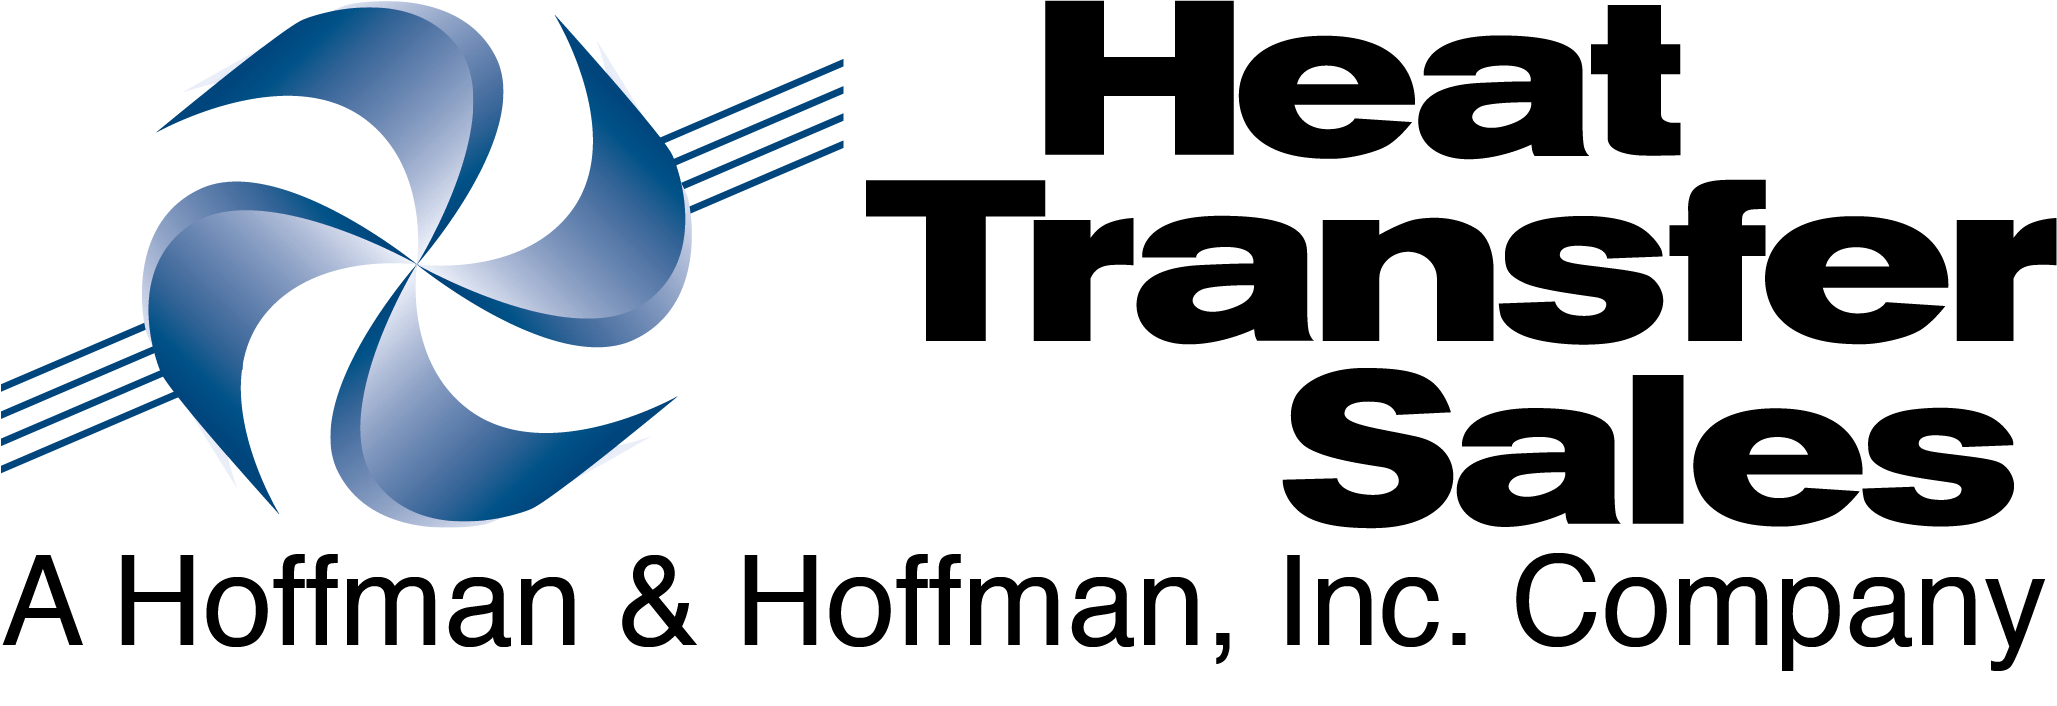 HTS logo with a Hoffman Company